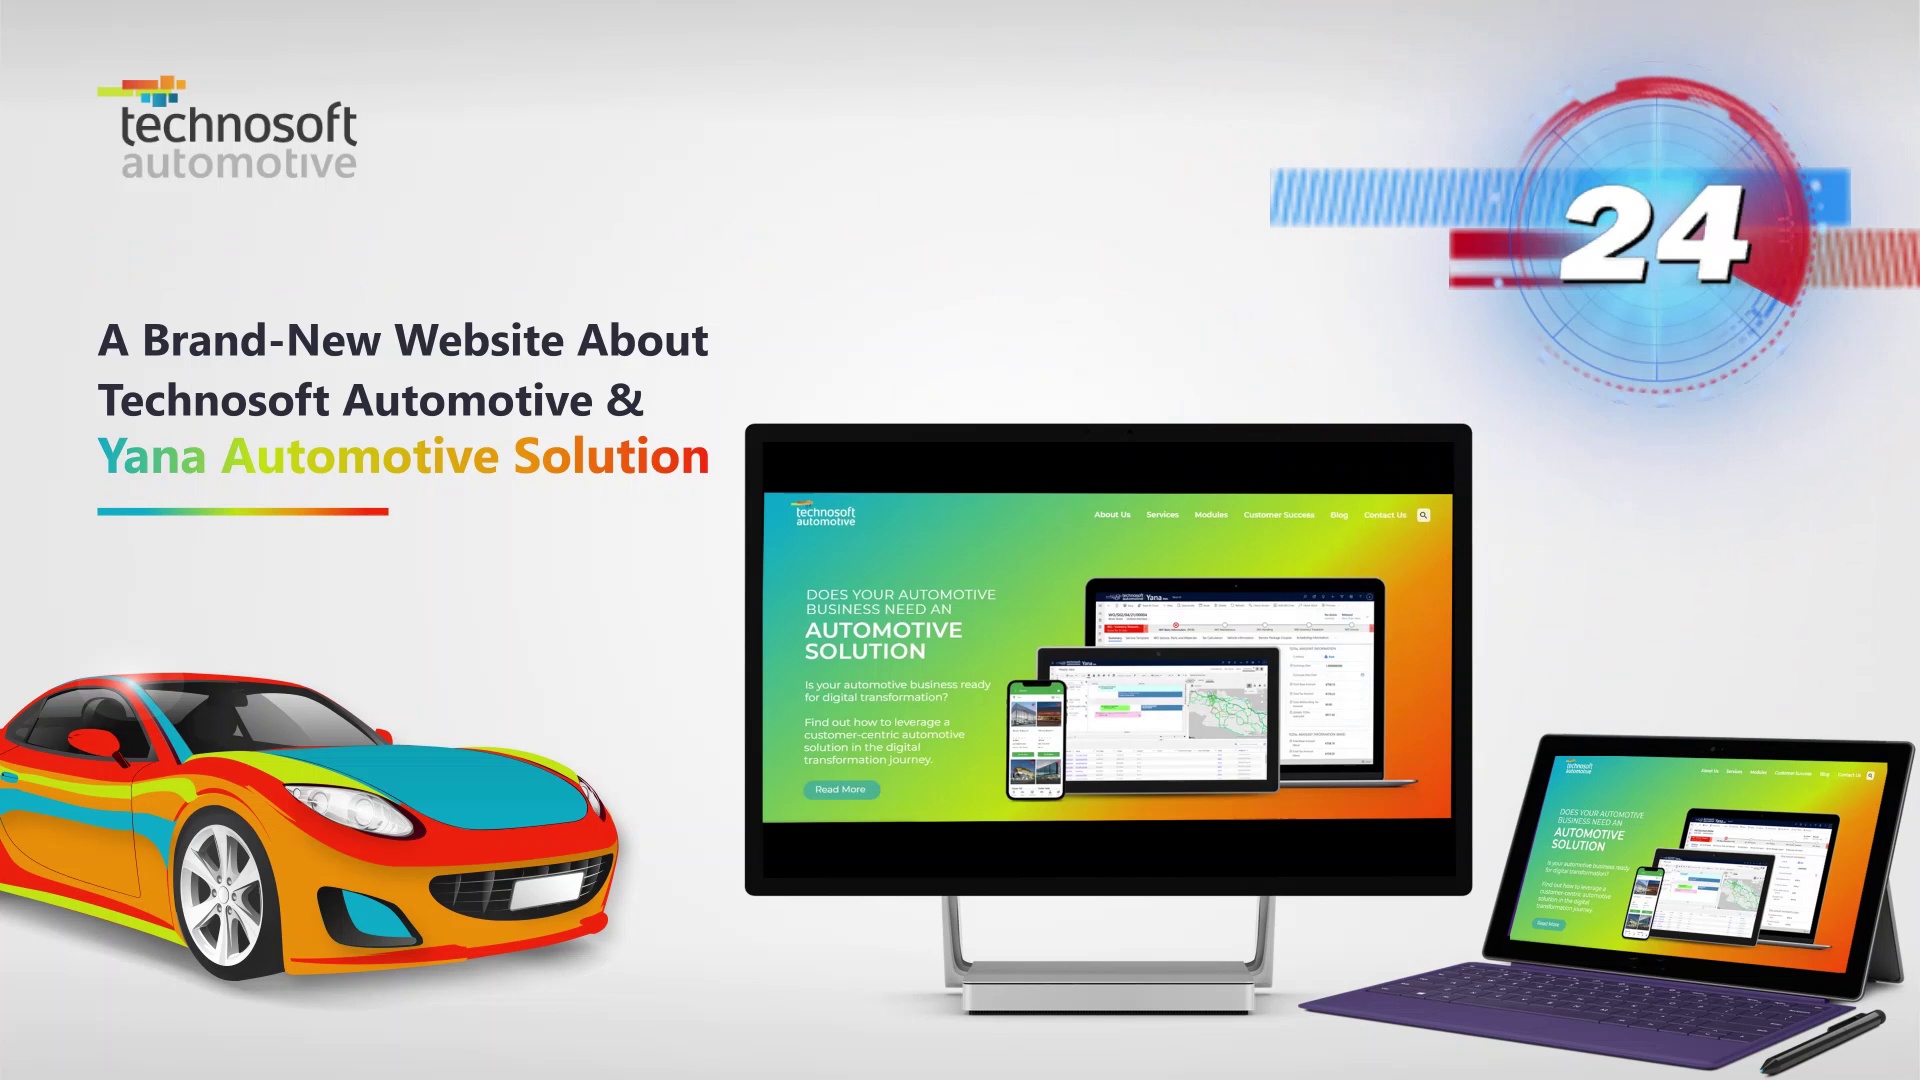 [Announcing a Brand-New Technosoft Automotive Website Based on Your Automotive Business Needs] | Yana Automotive Solution | Dealer Management System (DMS) | Technosoft Automotive